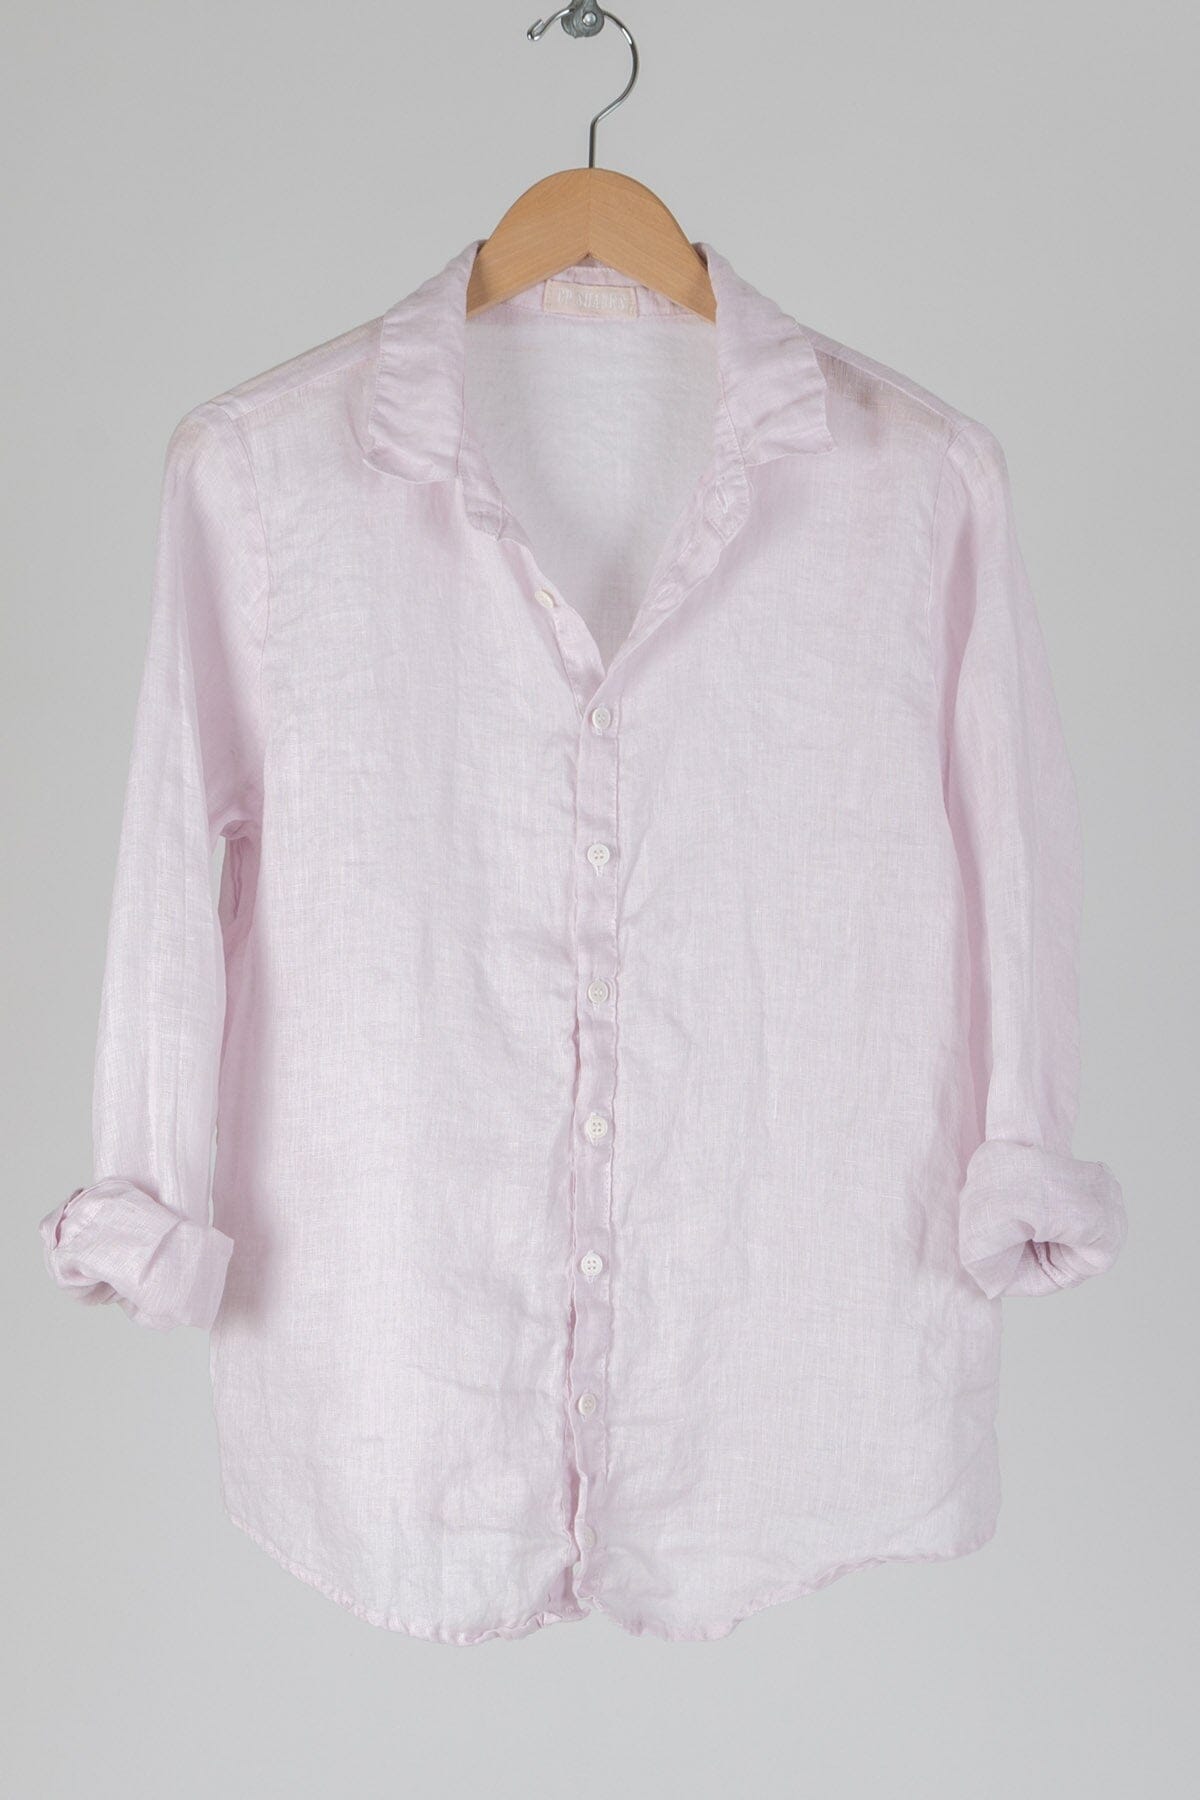 Romy - Linen S10 - Linen Shirt/Top/Tunic CP Shades lavender